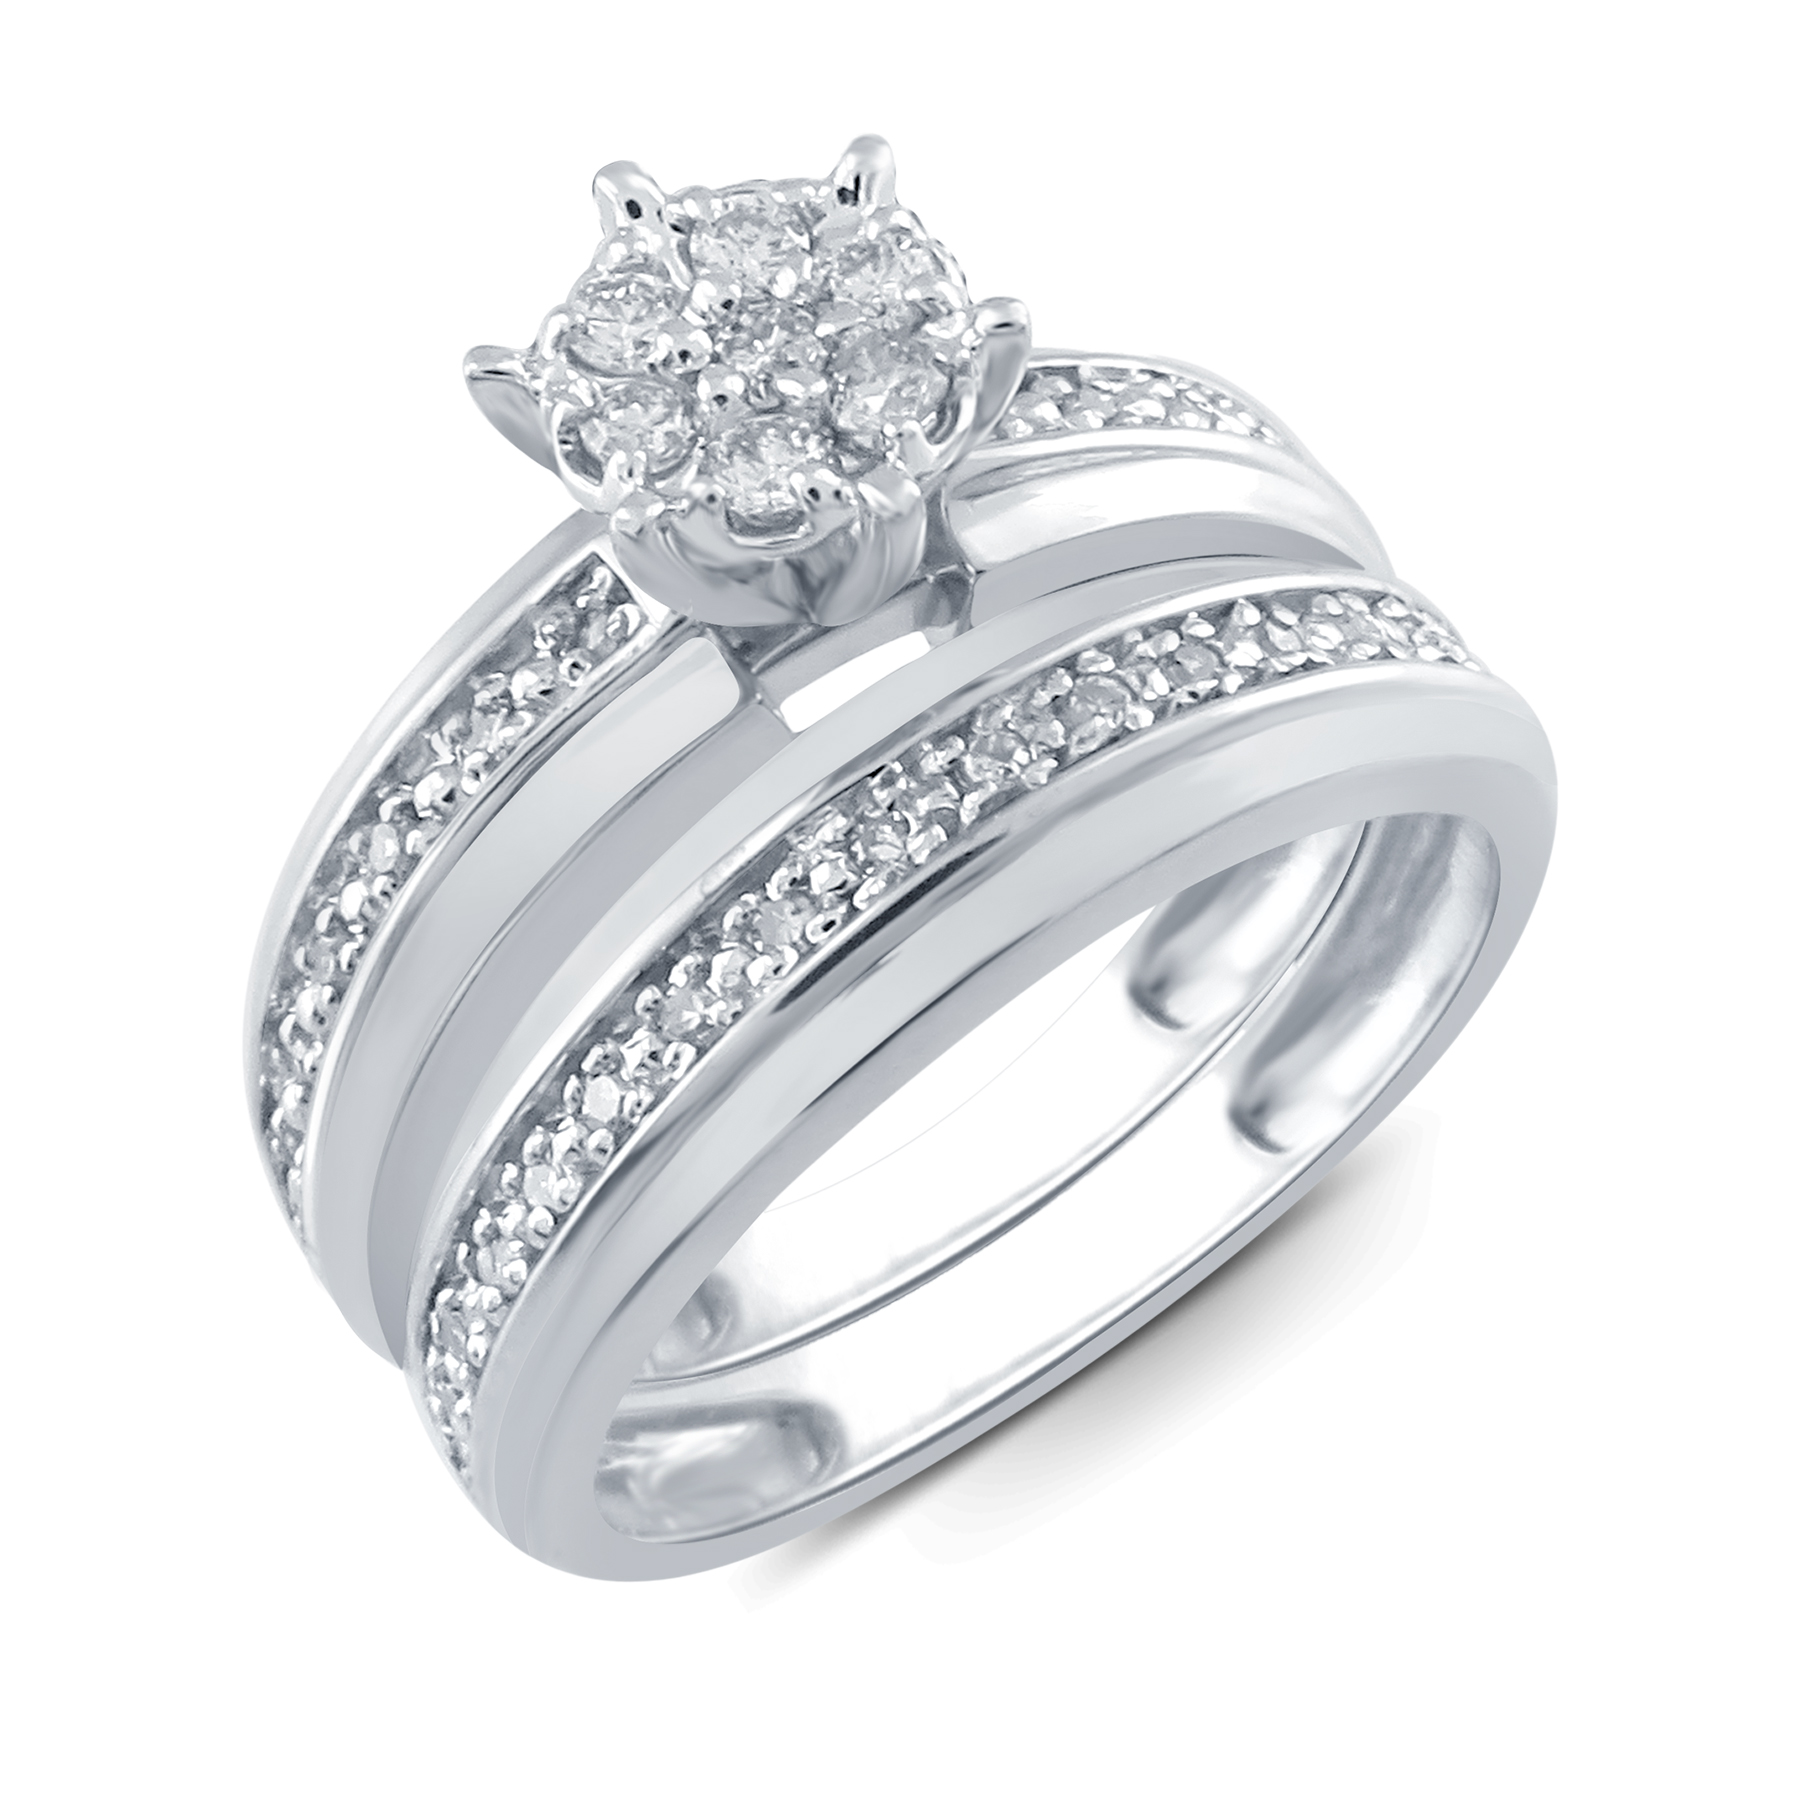 10K White Gold 1/4 CTTW Certified Diamond Ring Set